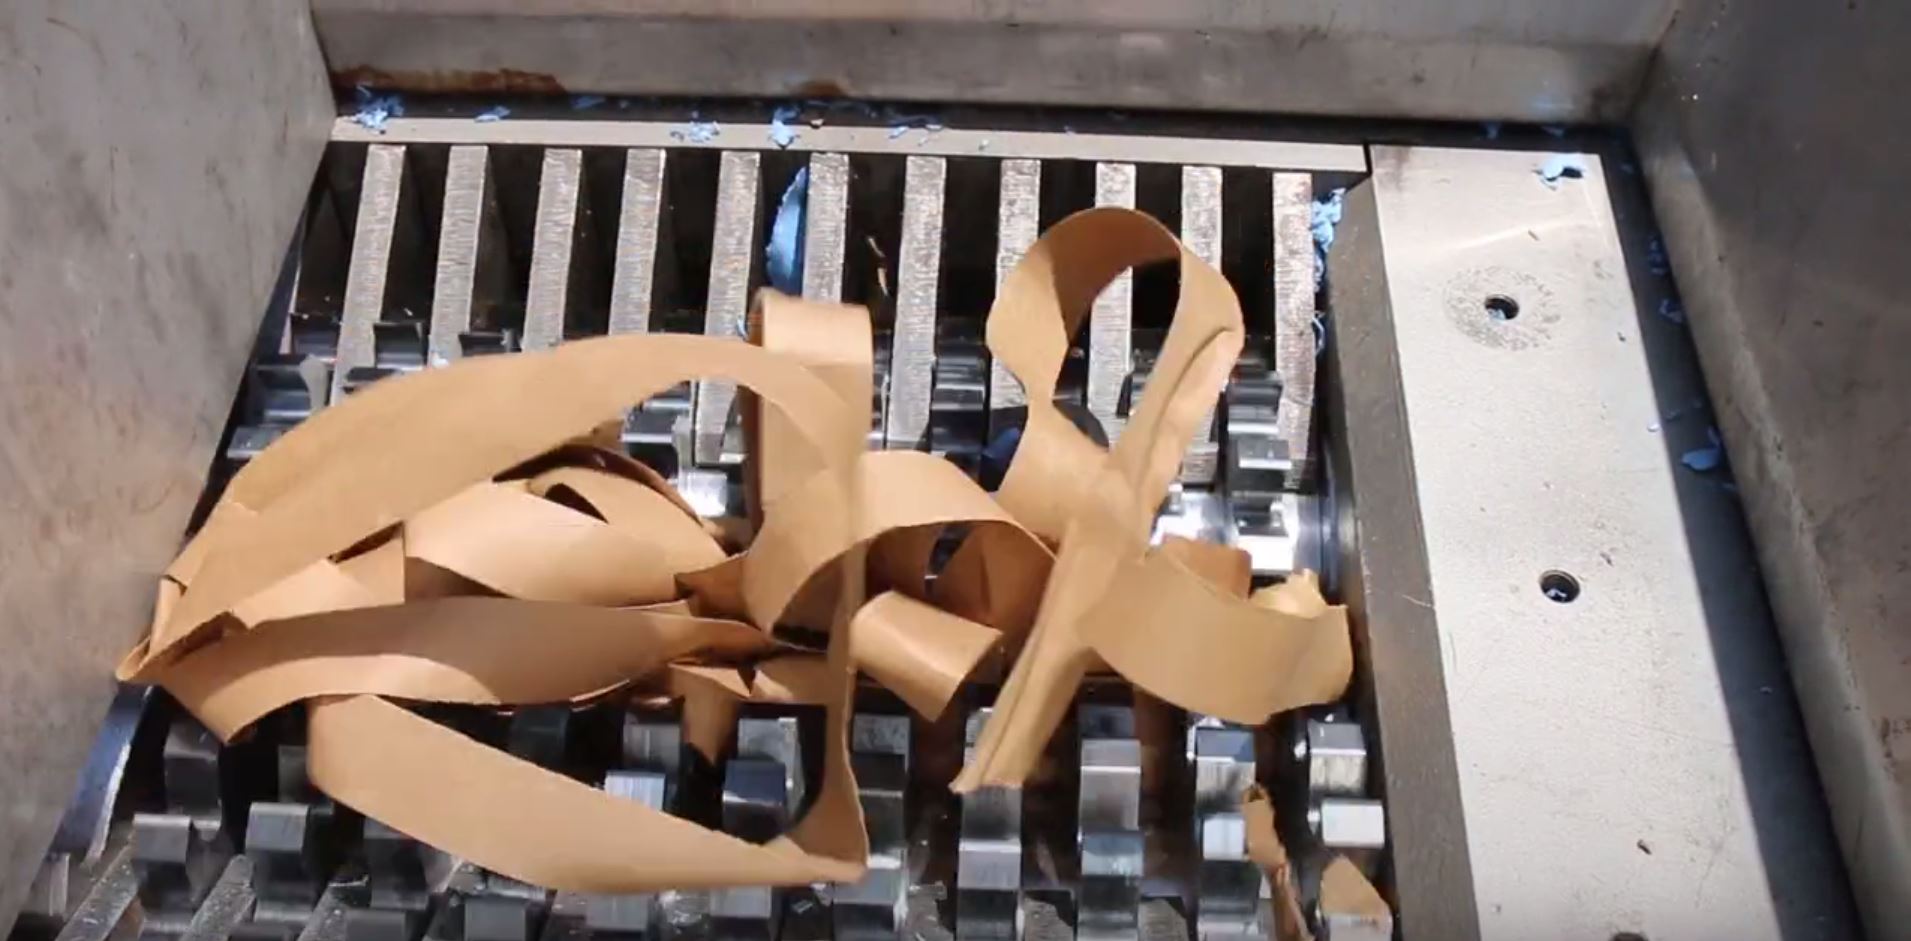 ribbons of cardboard packaging being destroyed in an industrial shredder